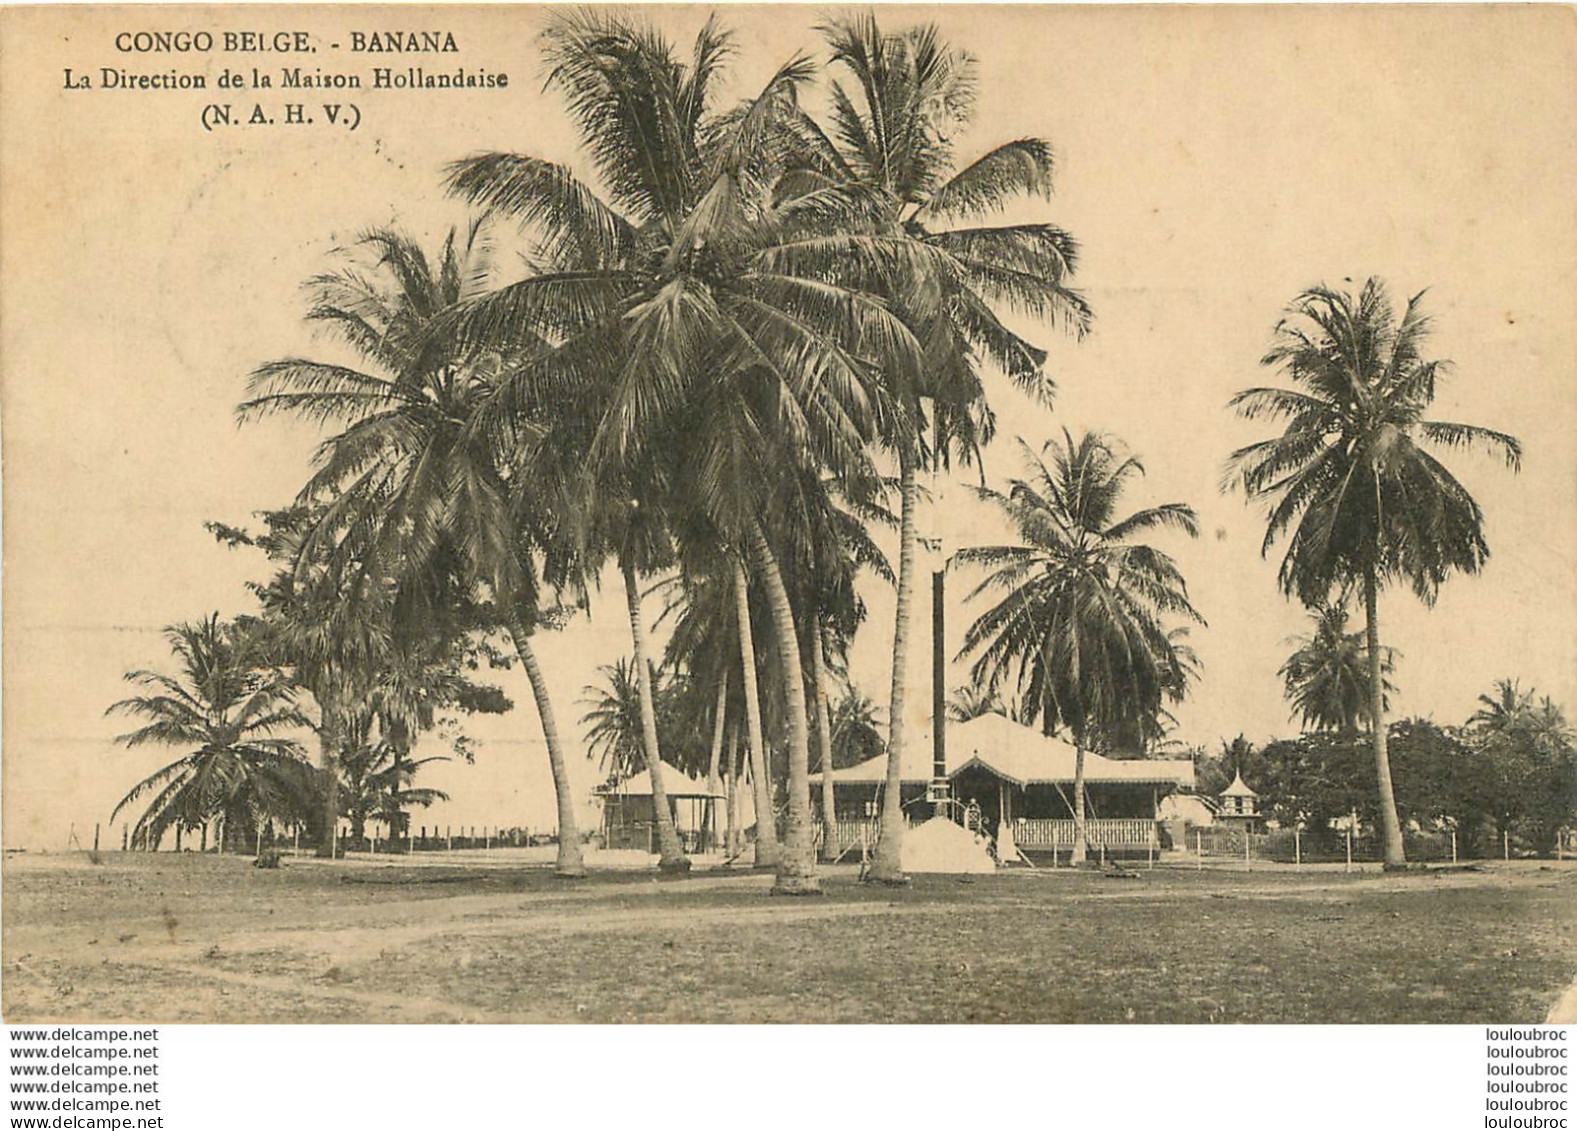 CONGO BELGE BANANA DIRECTION DE LA MAISON HOLLANDAISE  N.A.H.V. - Belgian Congo